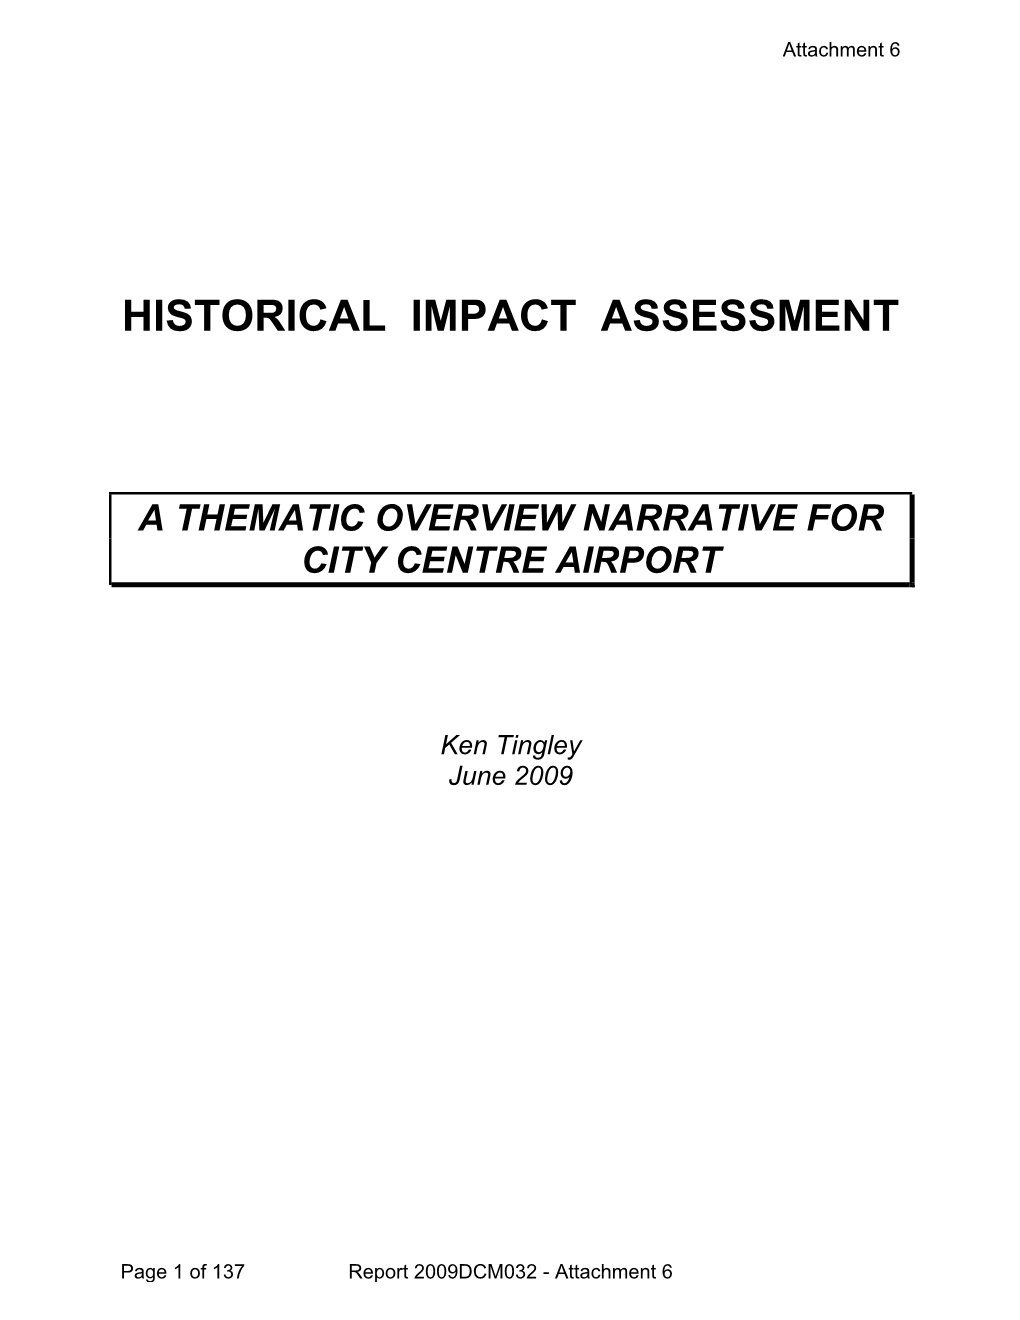 Historical Impact Assessment